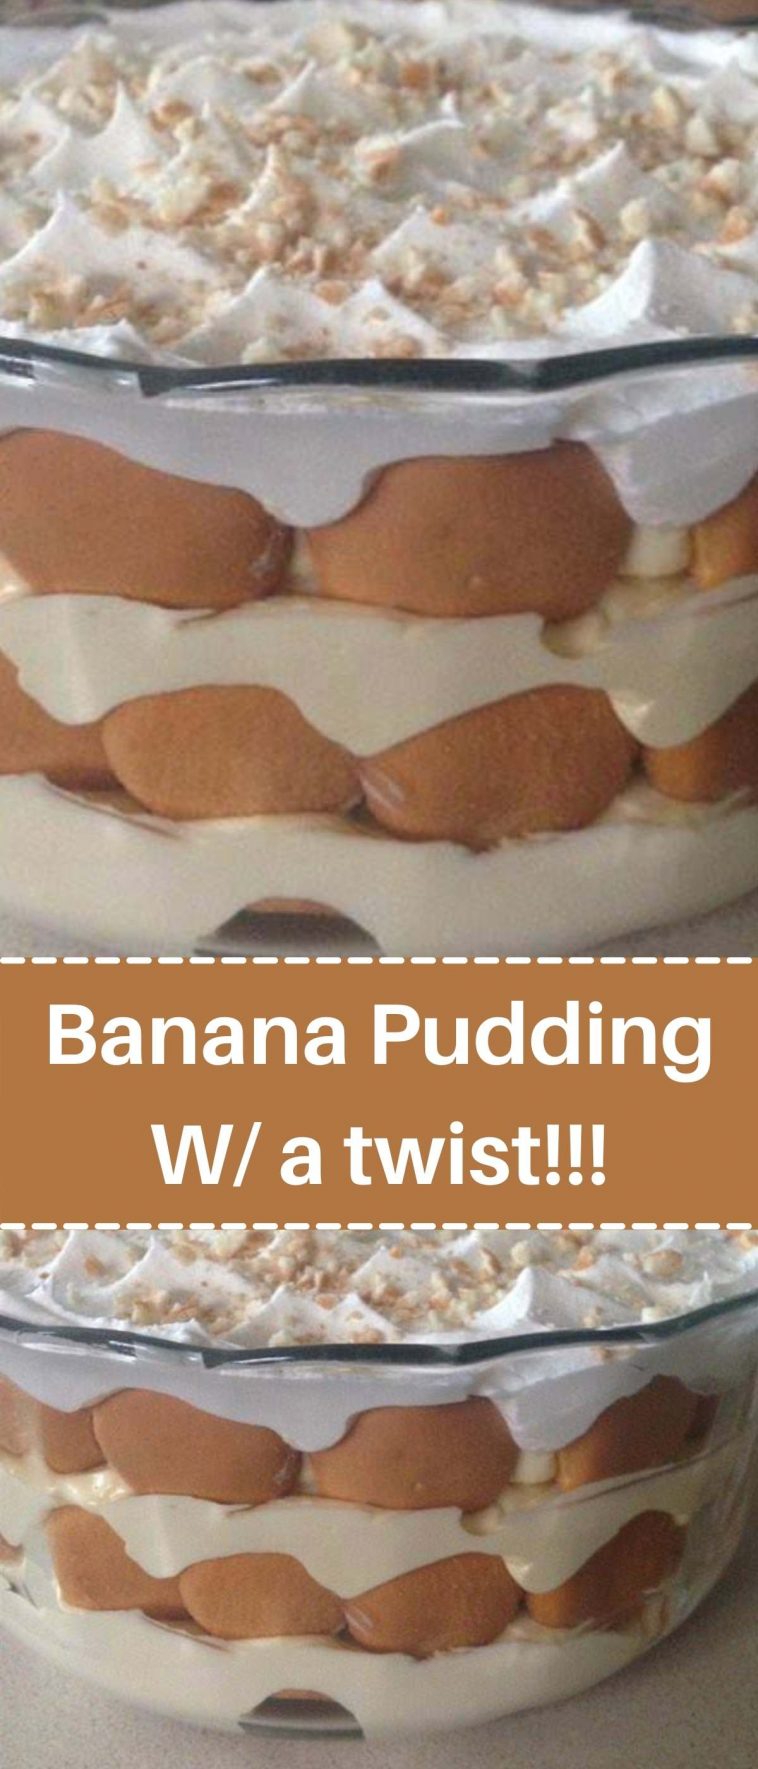 Banana Pudding W/ a twist!!!